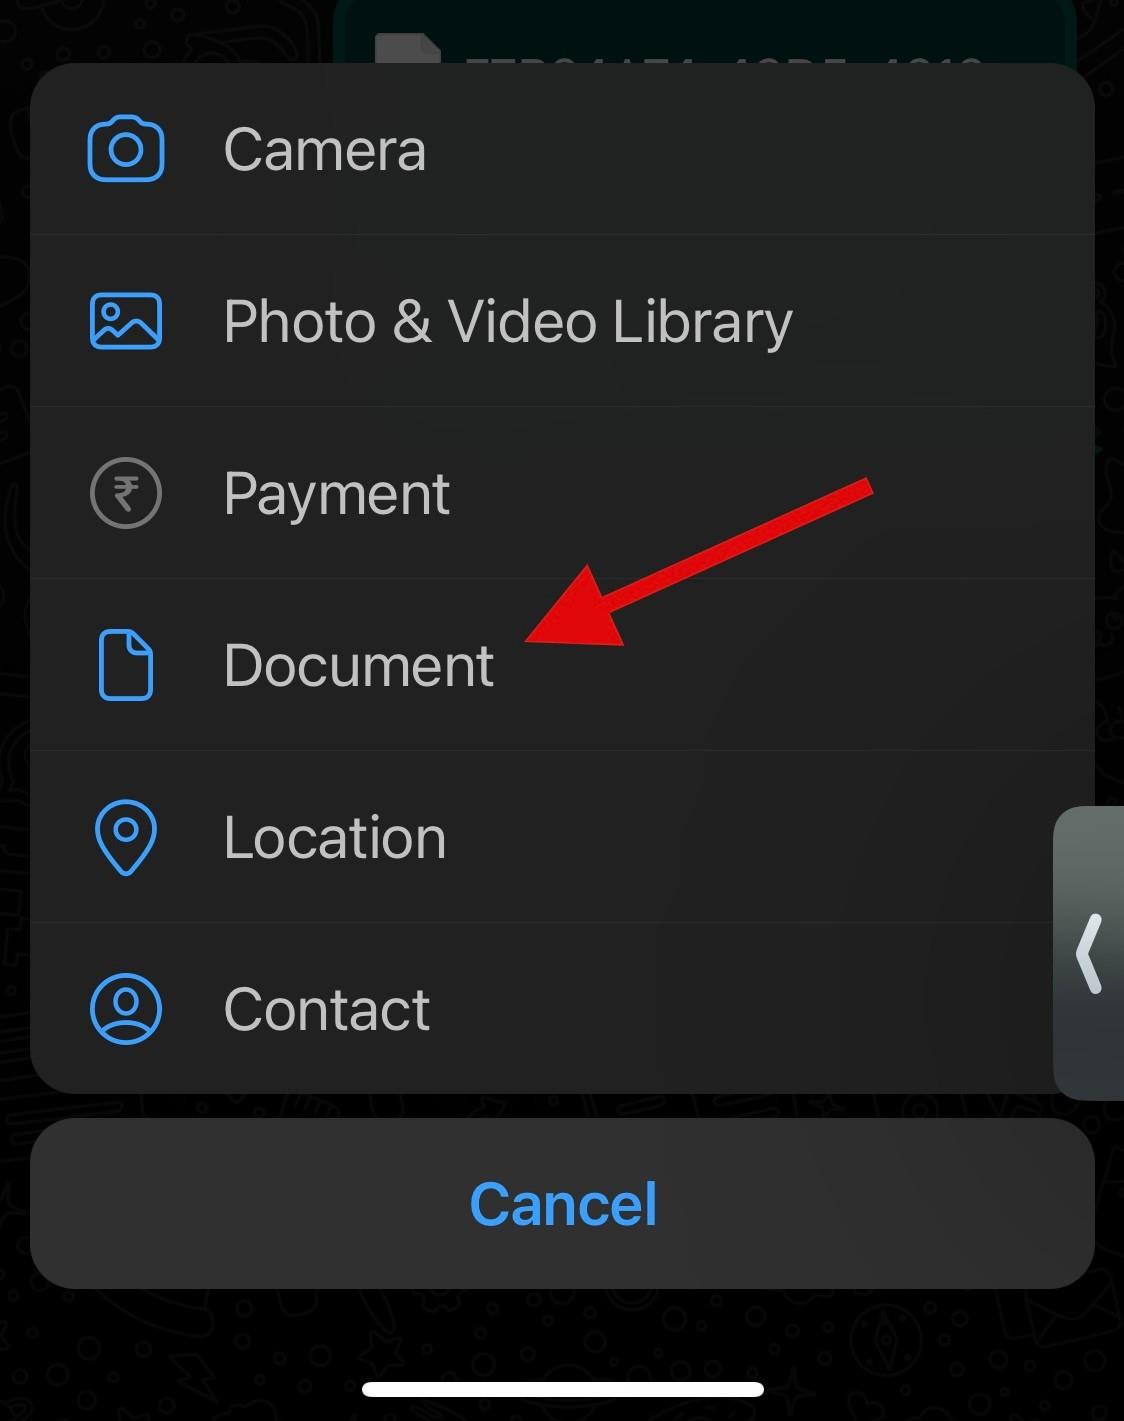 Sådan sender du billeder som dokument i Whatsapp på iPhone eller Android